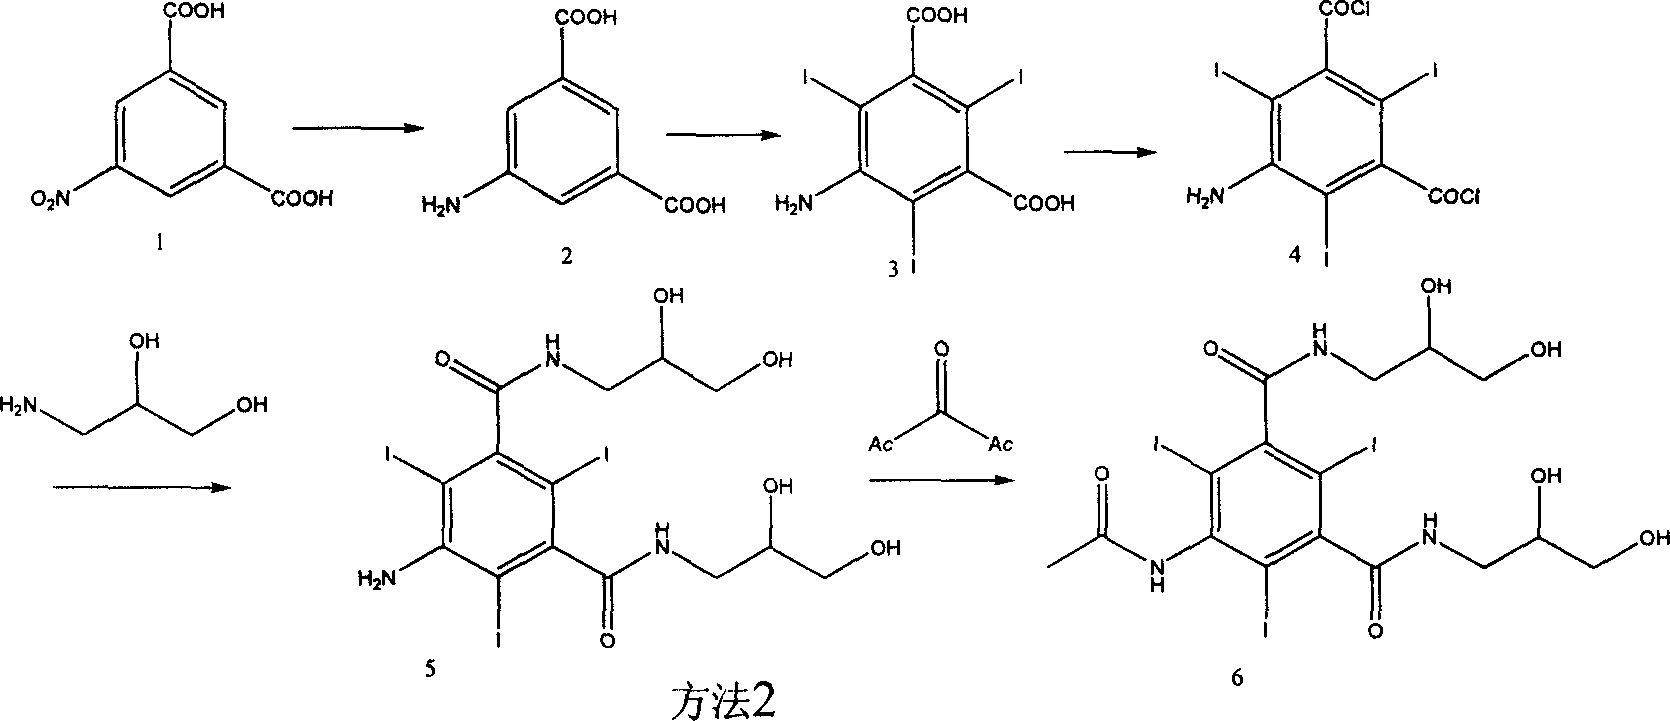 Process for preparing 5-acetamino-N,N'-bis (2,3-dihydroxypropyl)-2,4,6-tri-iodo isophthalamide